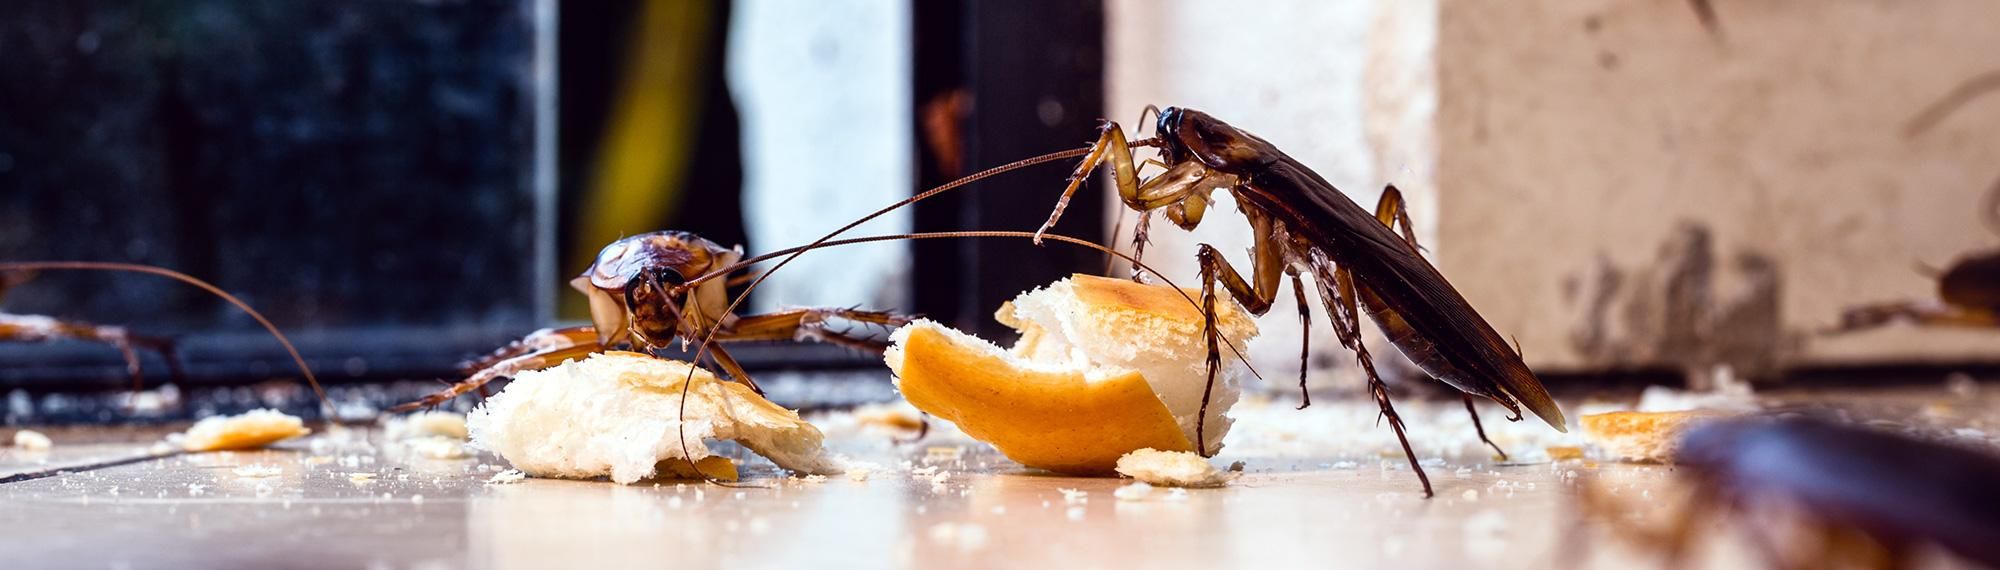 american cockroaches feeding on crumbs